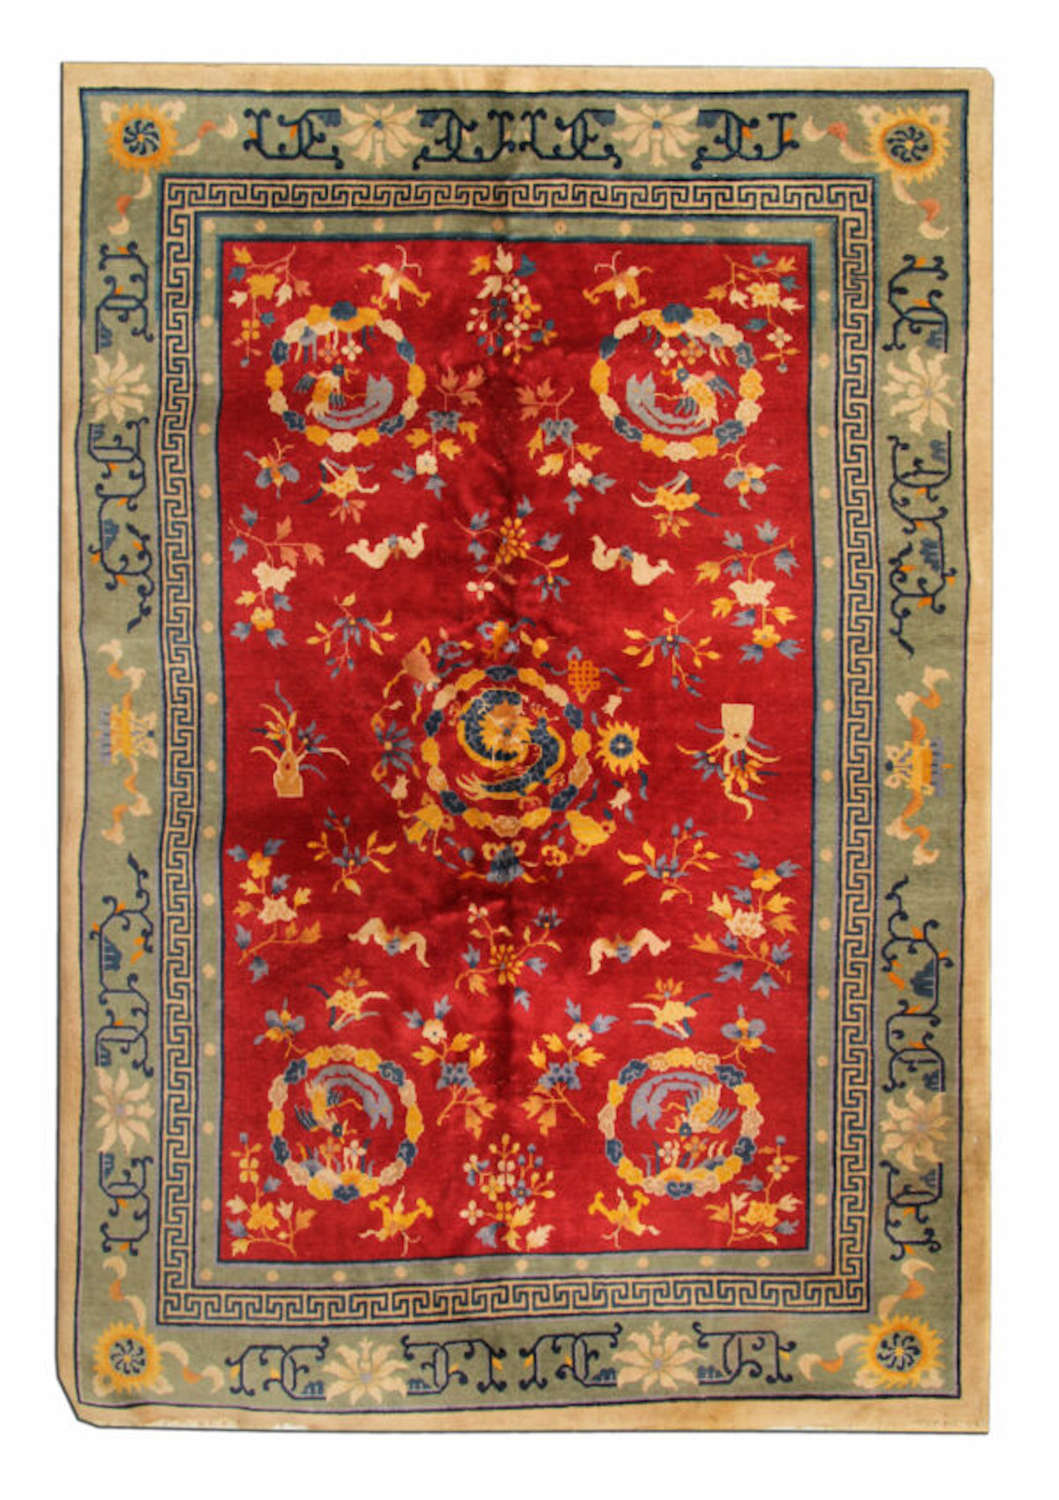 Antique Carpet Chinese Rug From Tebat